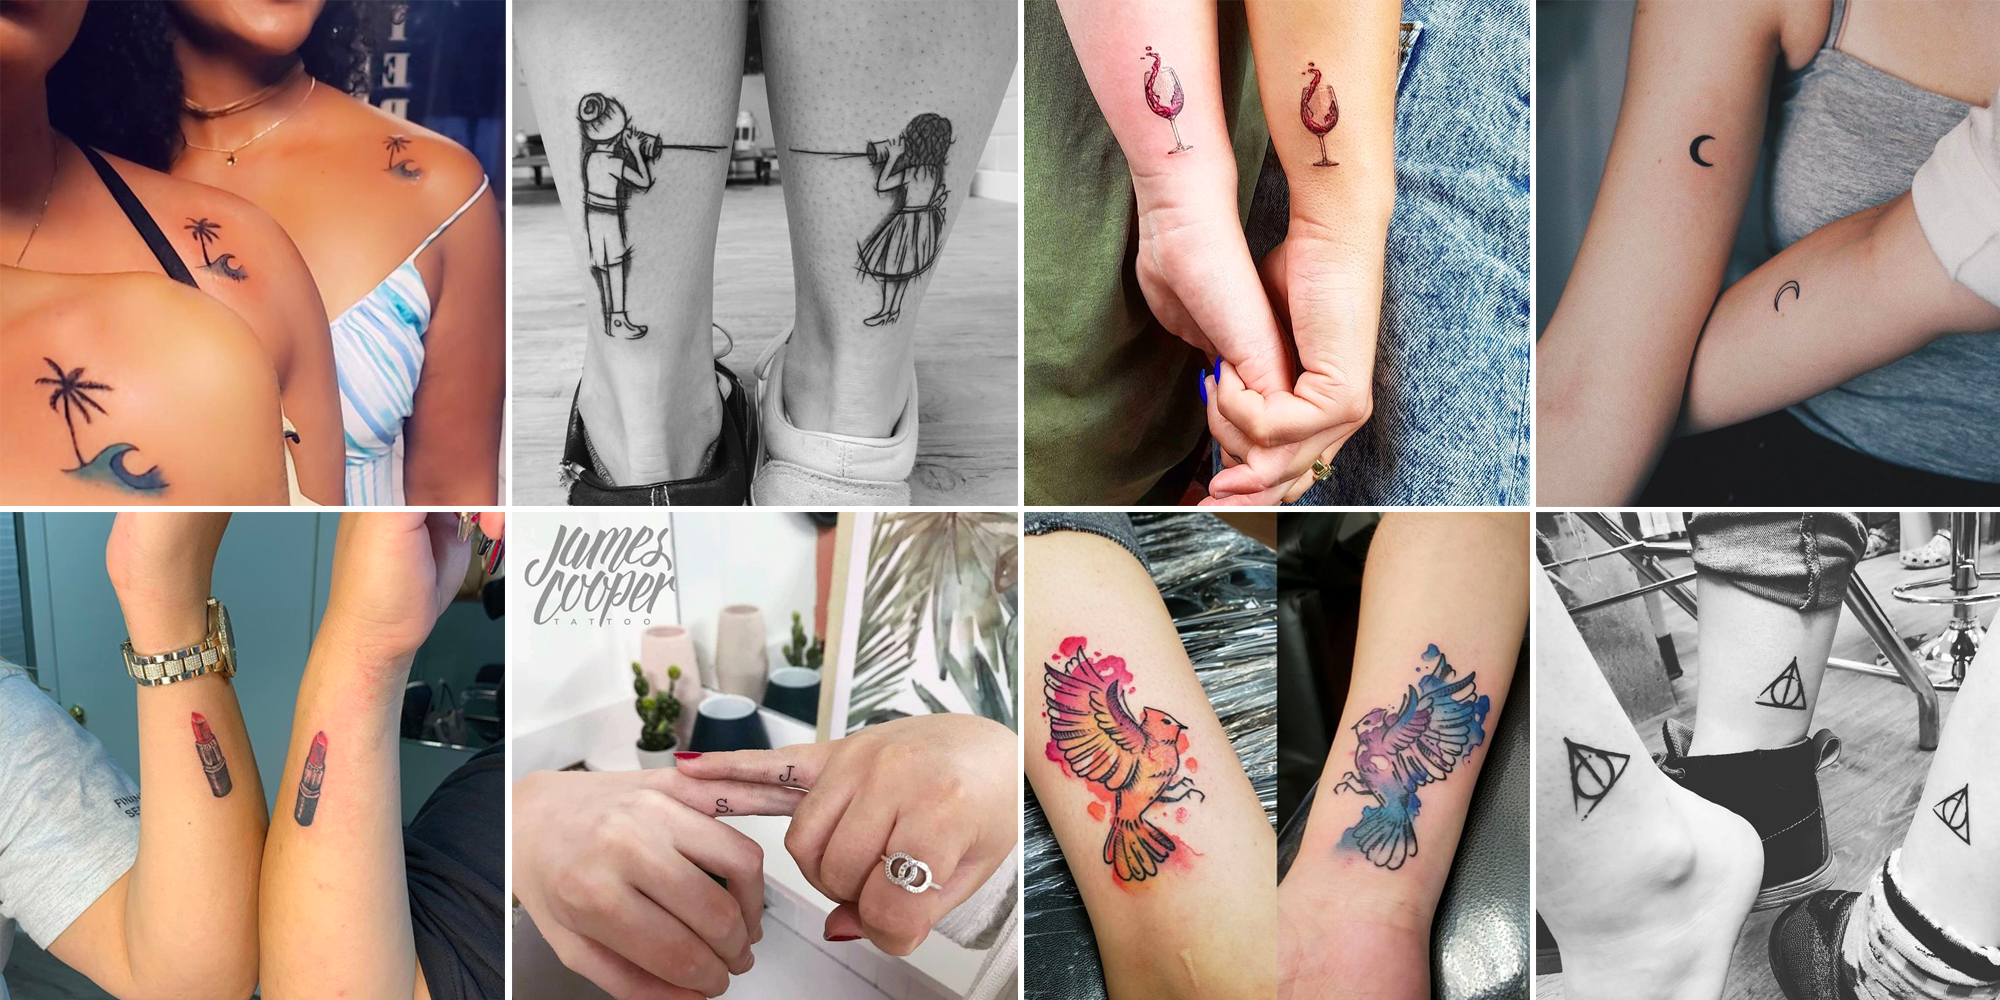 matching friendship tattoos ideas